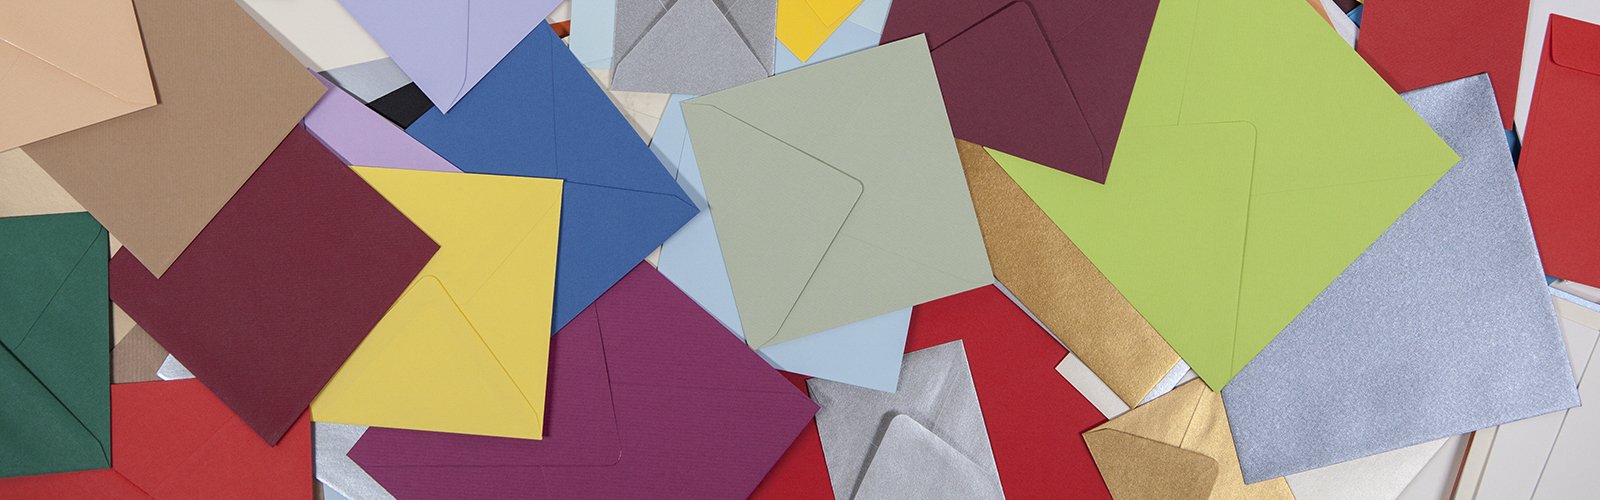 Enveloppes carres colores